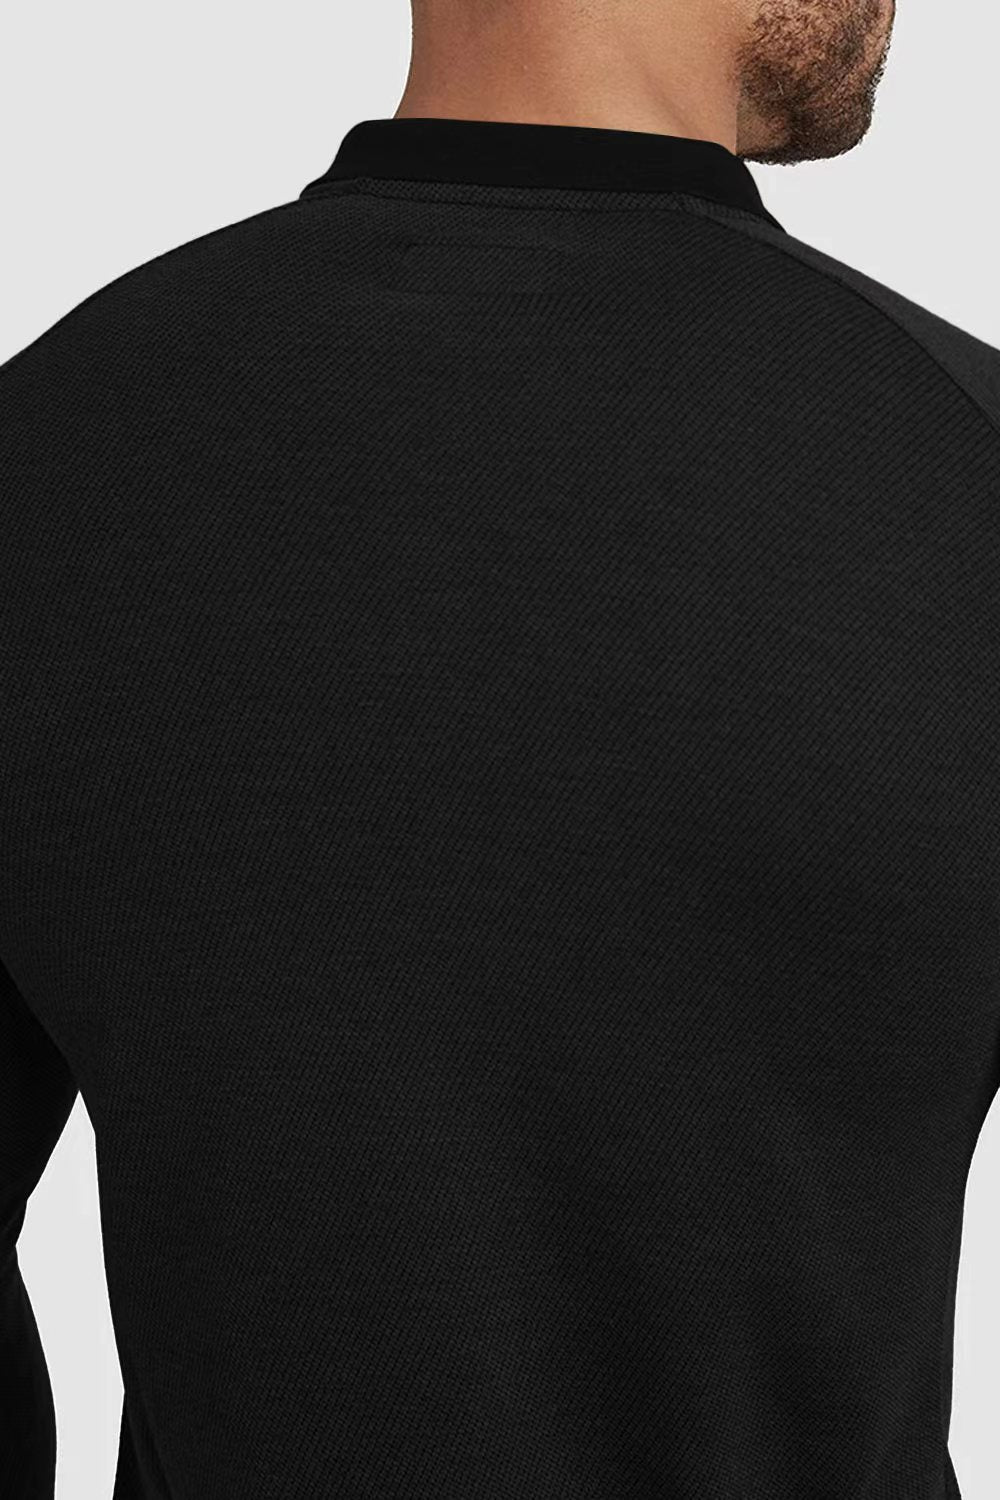 men's black slim fit polo shirts